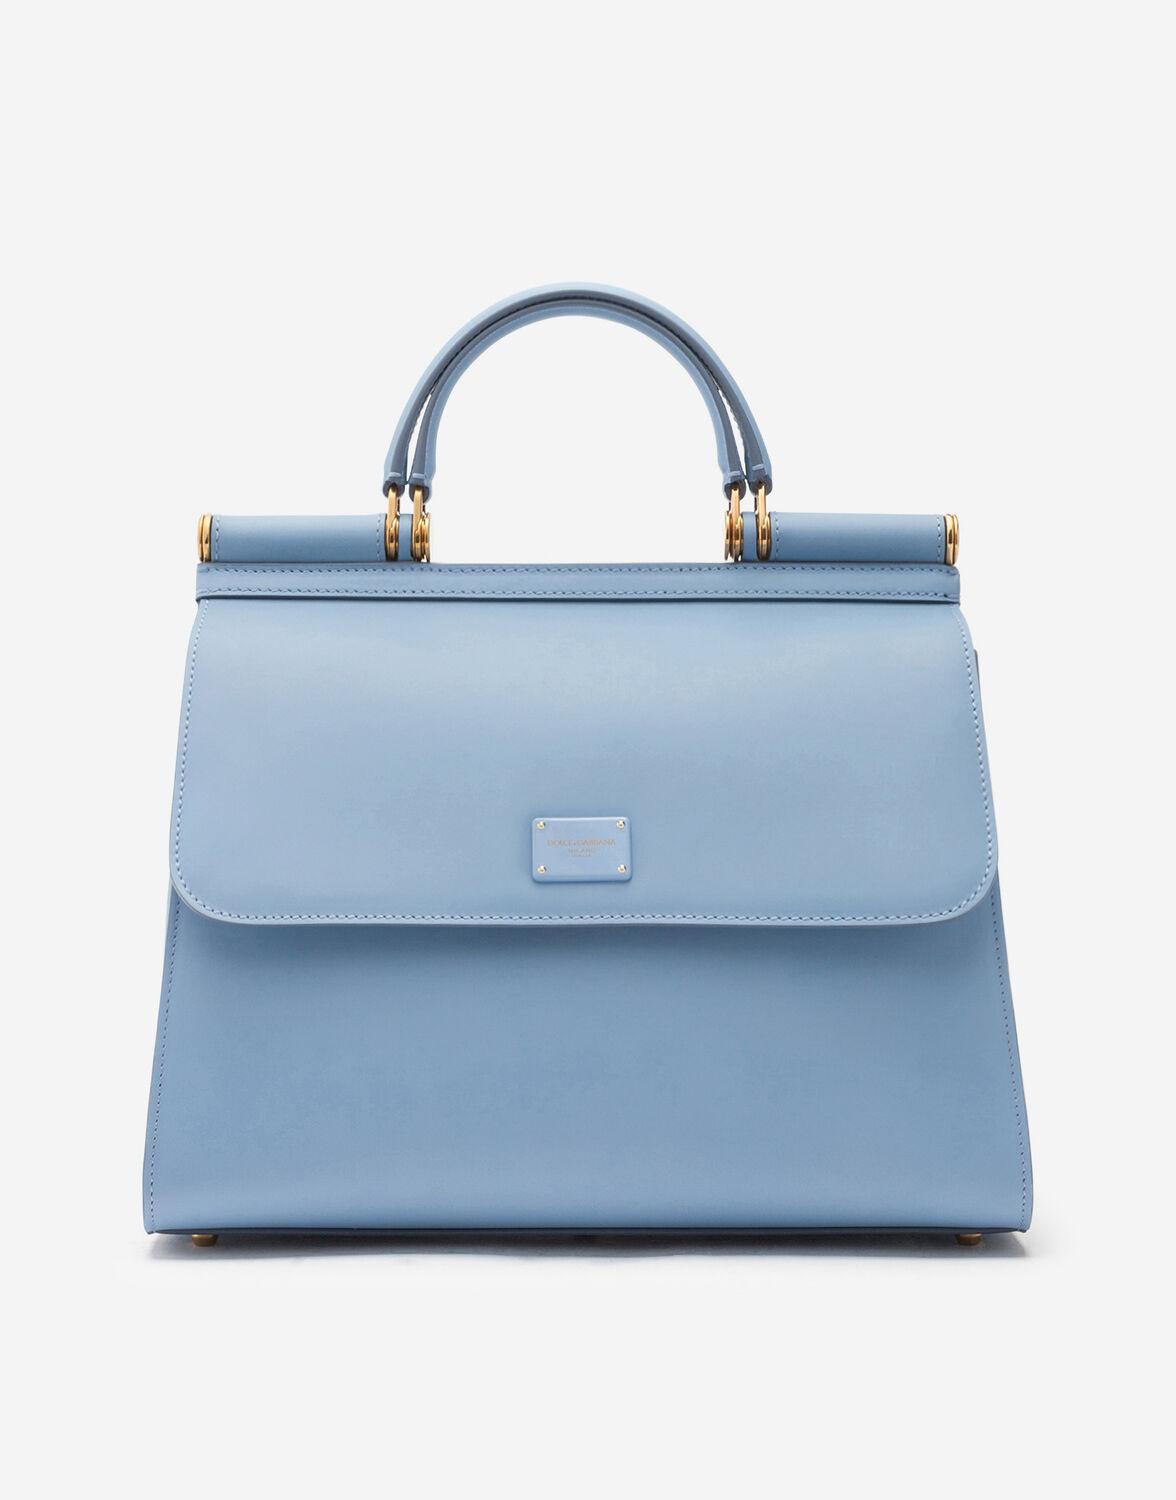 Dolce & Gabbana Large Calfskin Sicily 58 Bag in Blue | Lyst